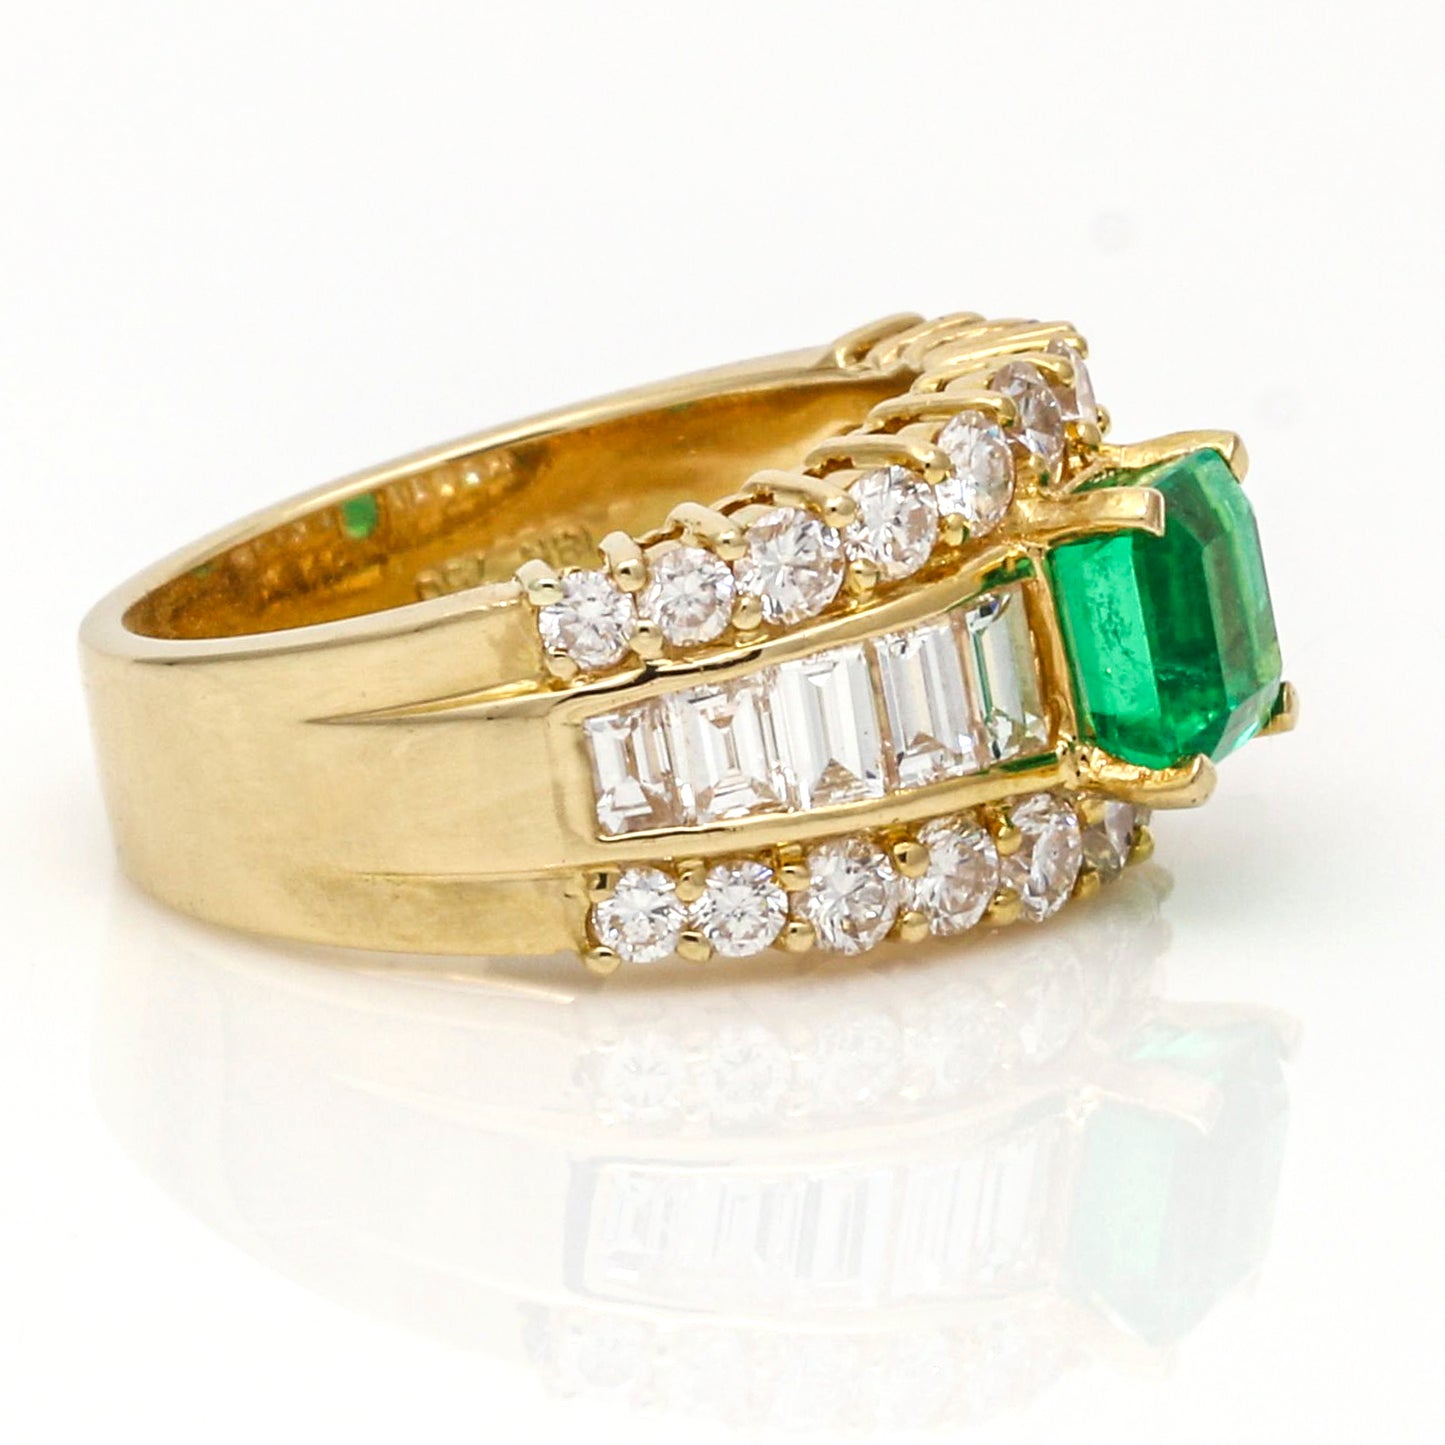 Emerald Diamond Statement Ring in 18k Yellow Gold